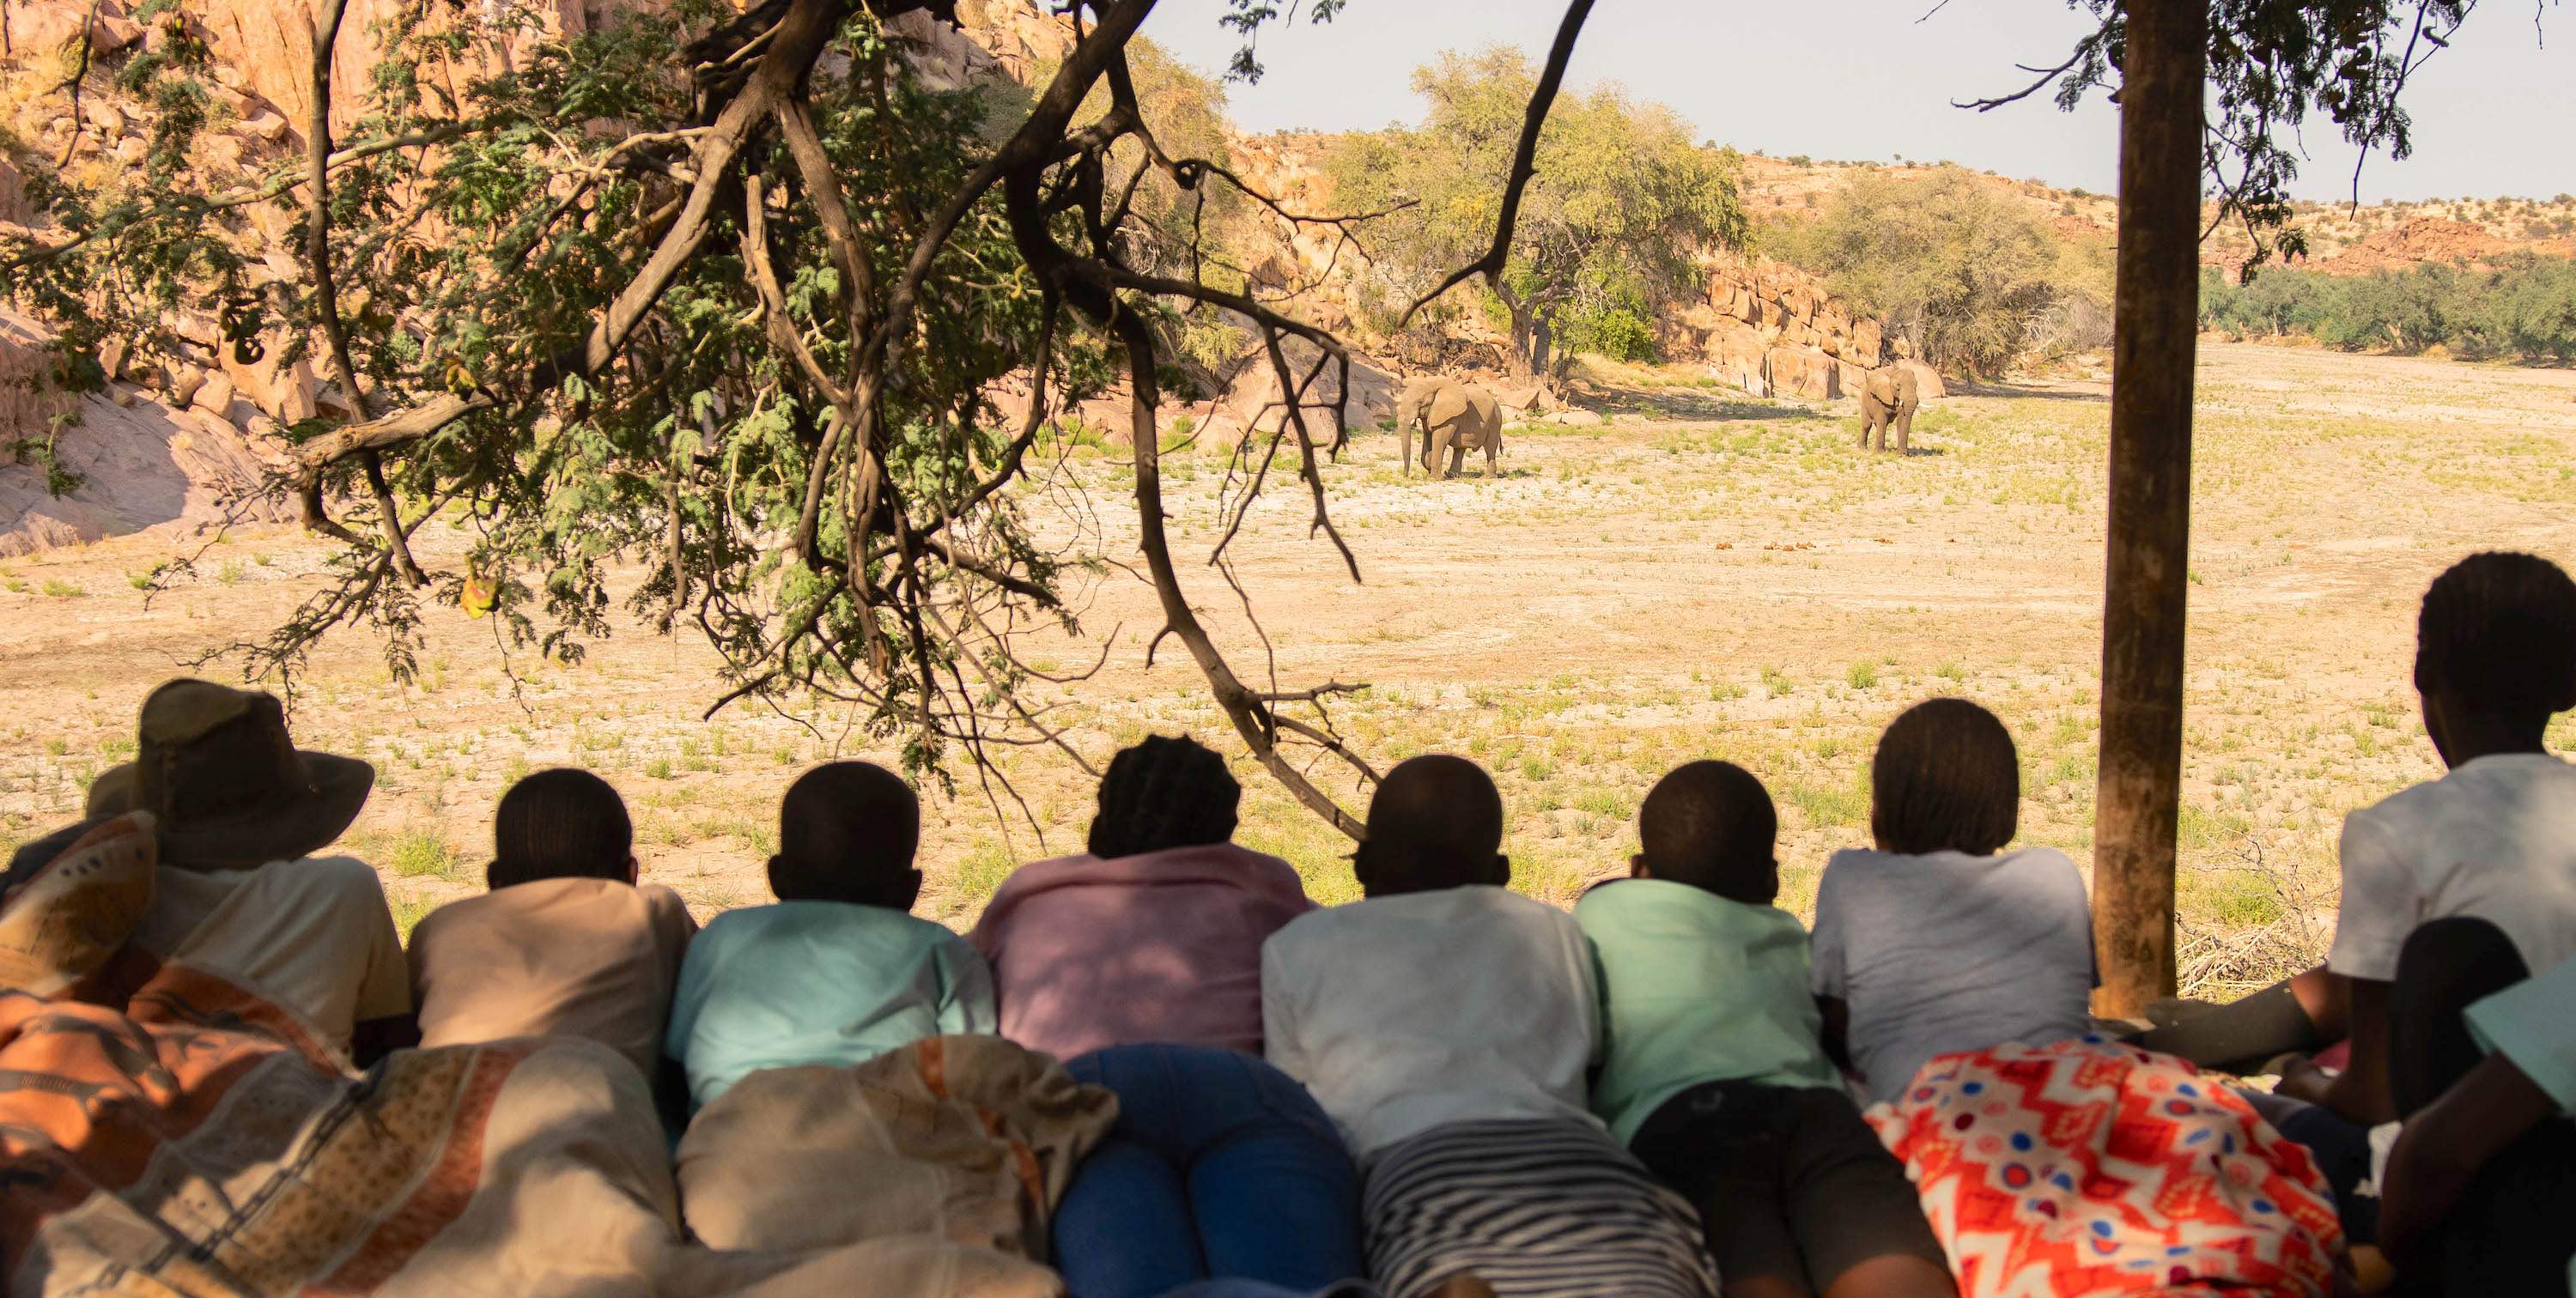 A line of children watch a pair of elephants.